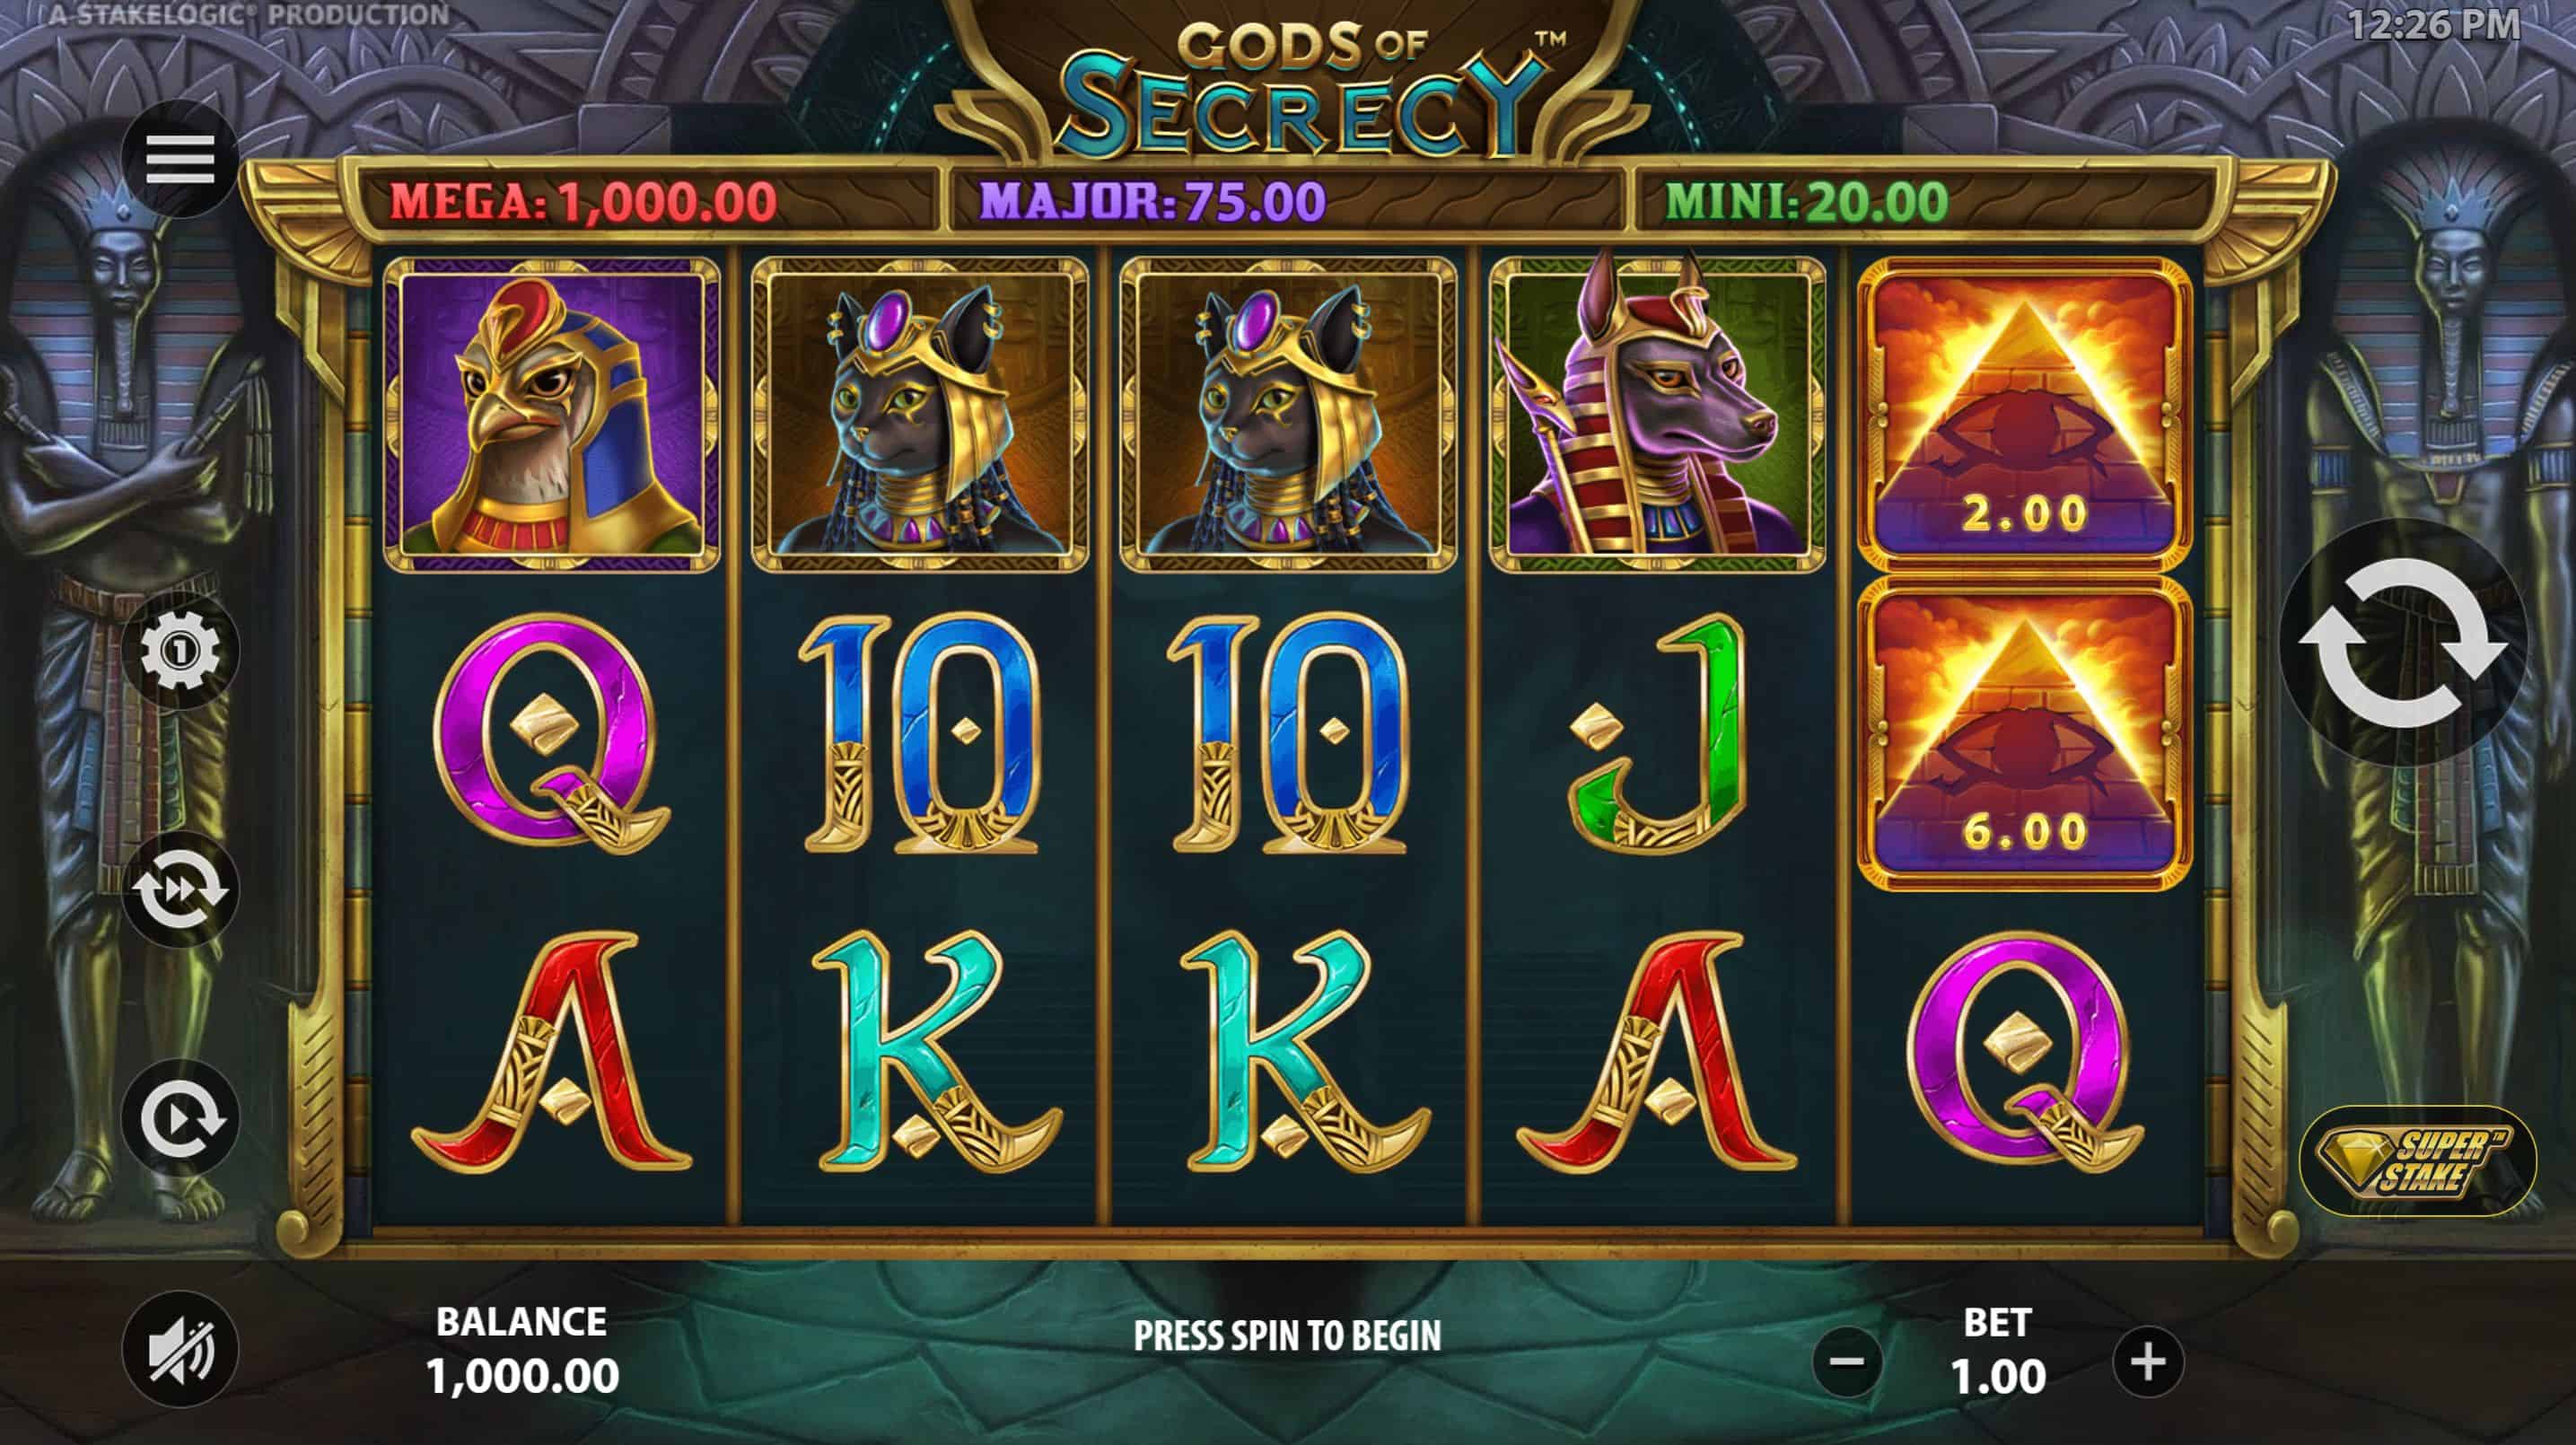 Gods of Secrecy Slot Game Free Play at Casino Ireland 01